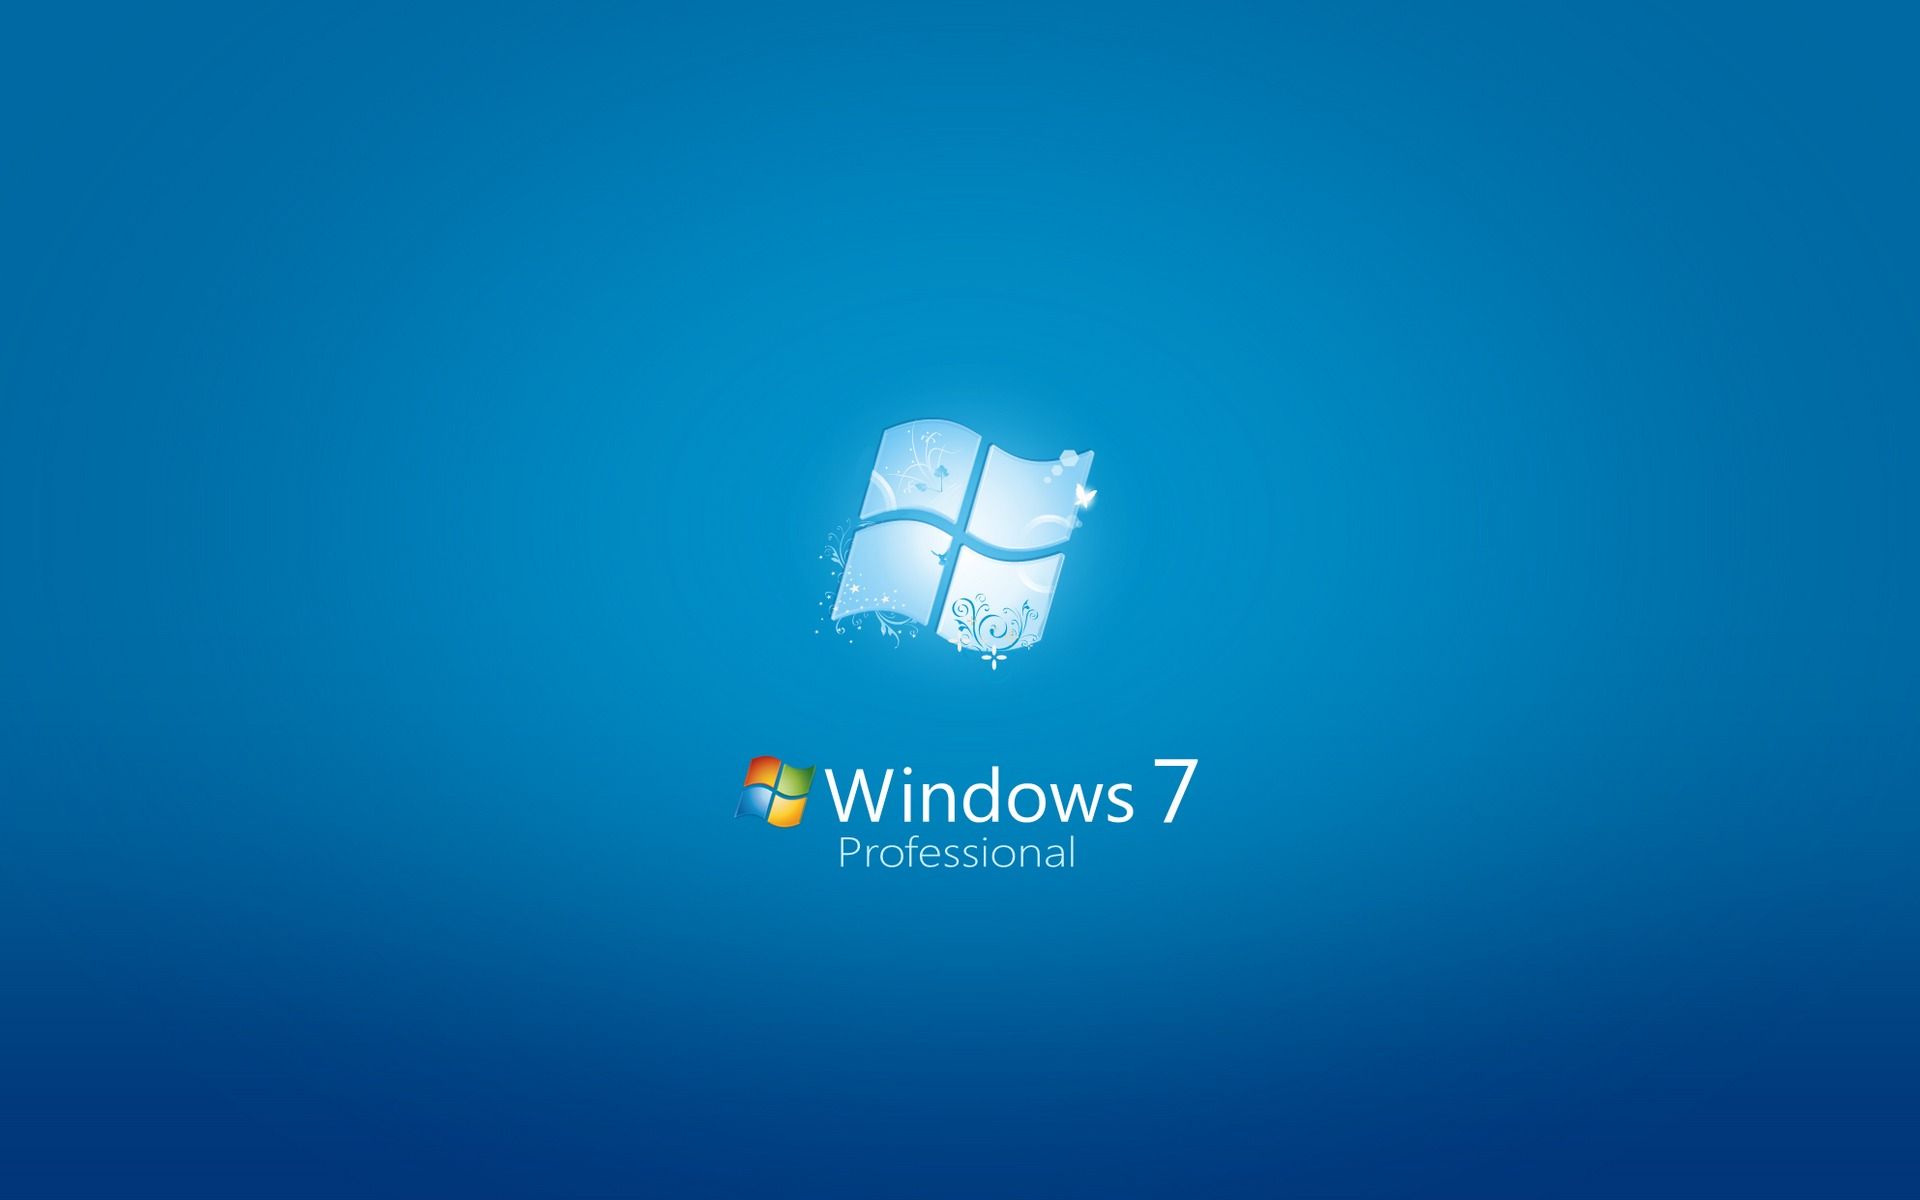 Free download Windows 7 Professional Wallpaper HD Wallpaper